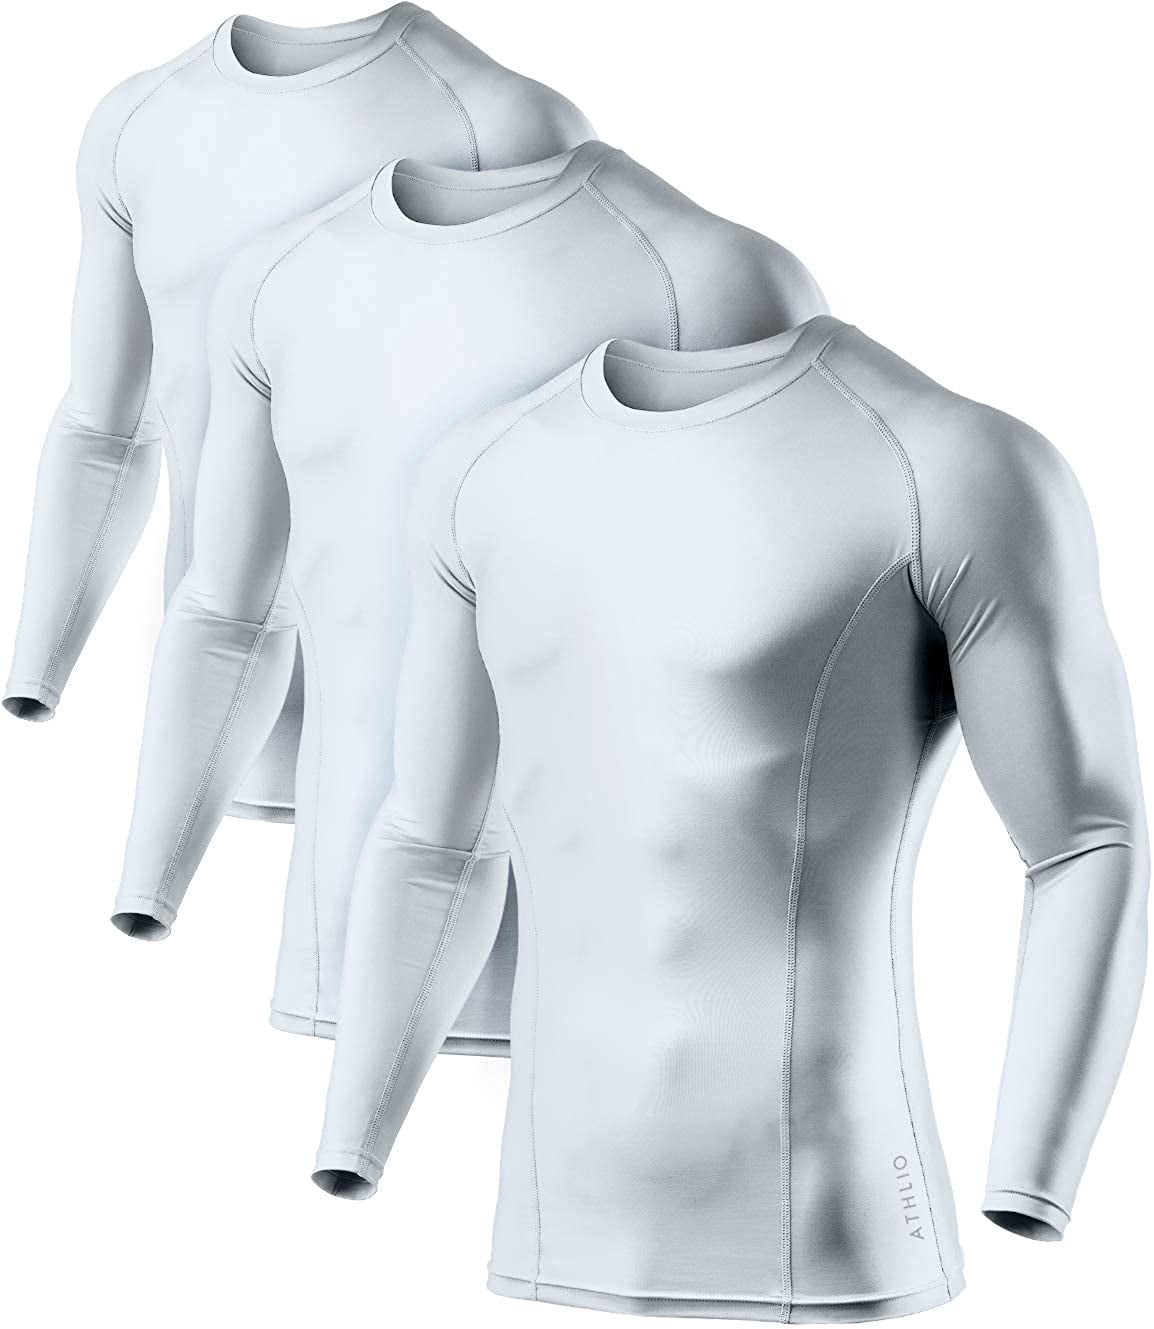 ATHLIO 1 oder 3 Pack Herren Cool Dry Kurzarm Kompressionsshirts Sport Baselayer T-Shirts Tops Athletic Workout Shirt 